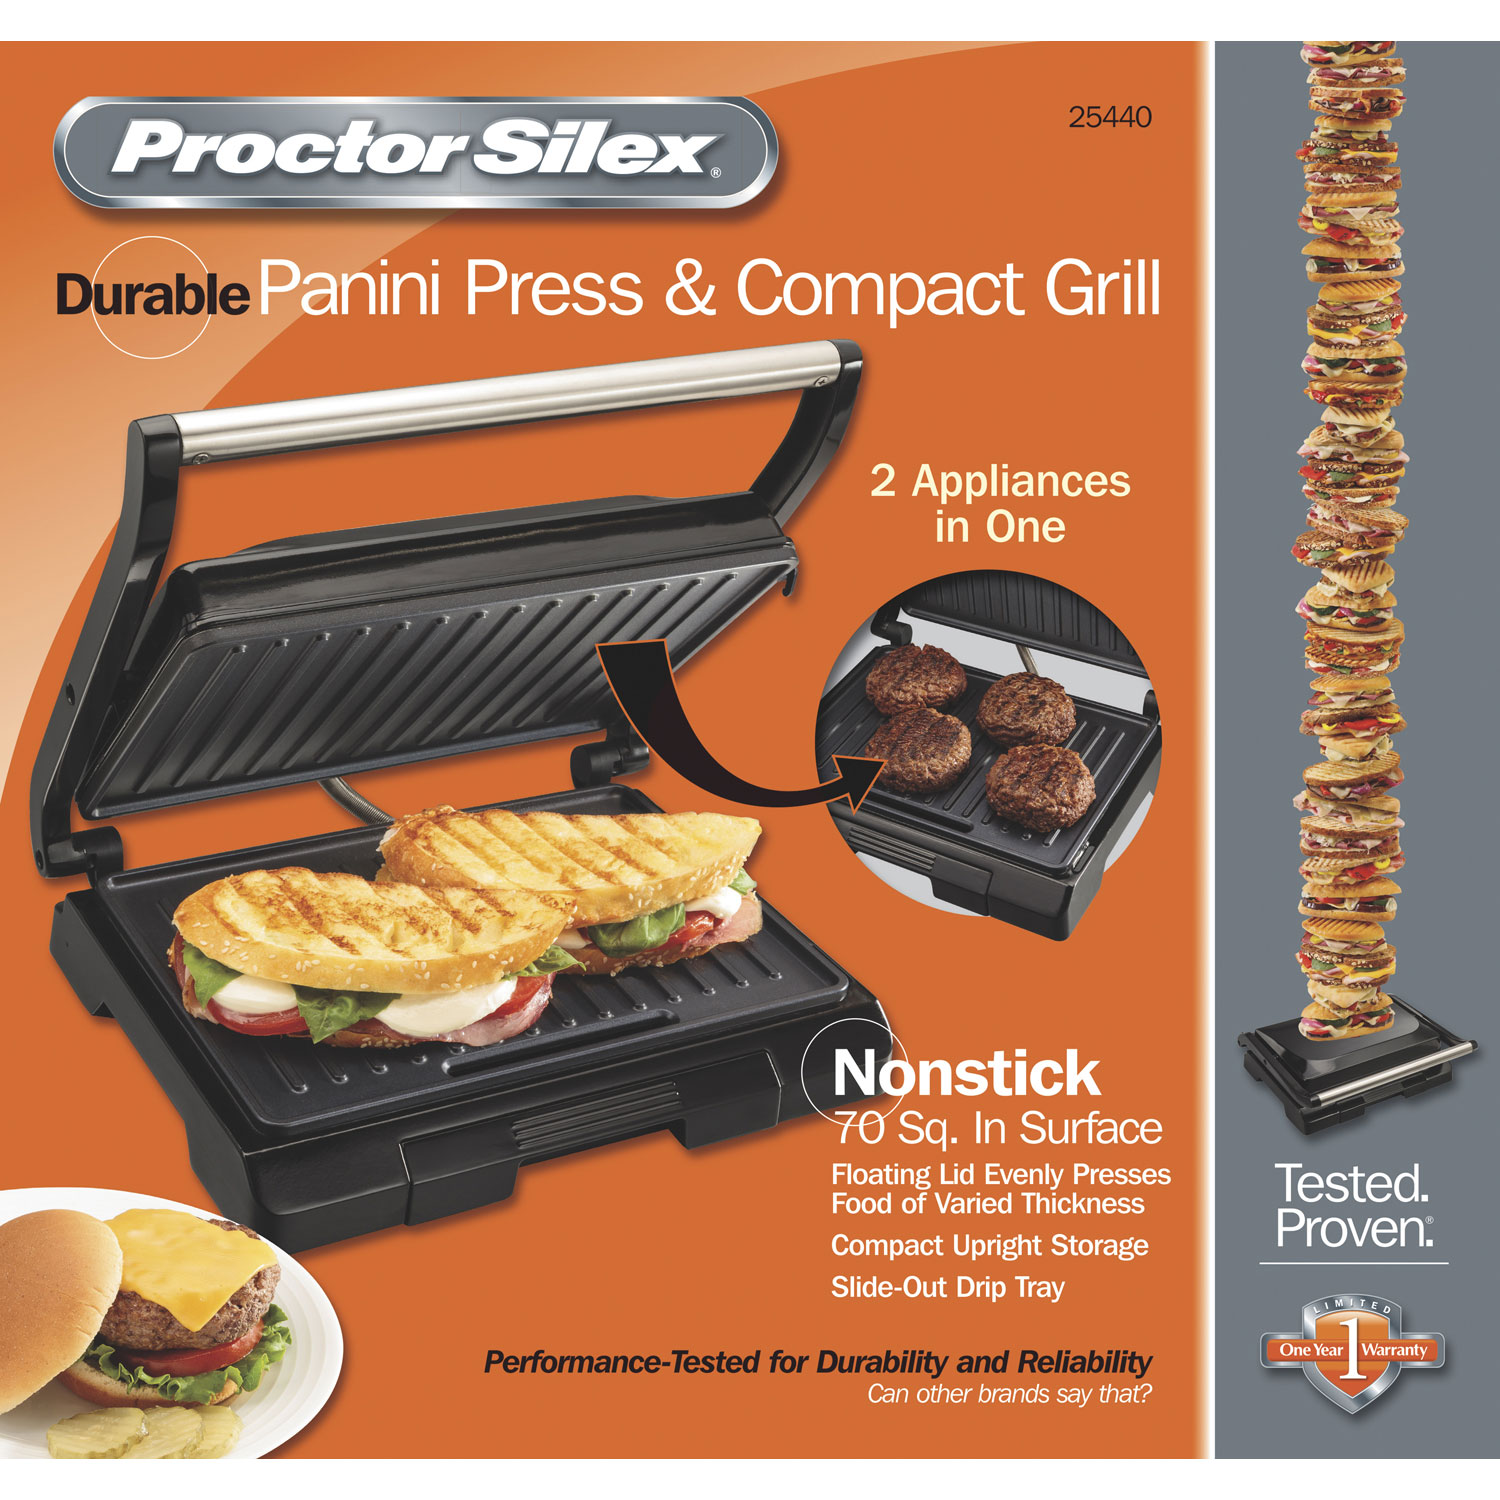 Panini Press & Compact Grill